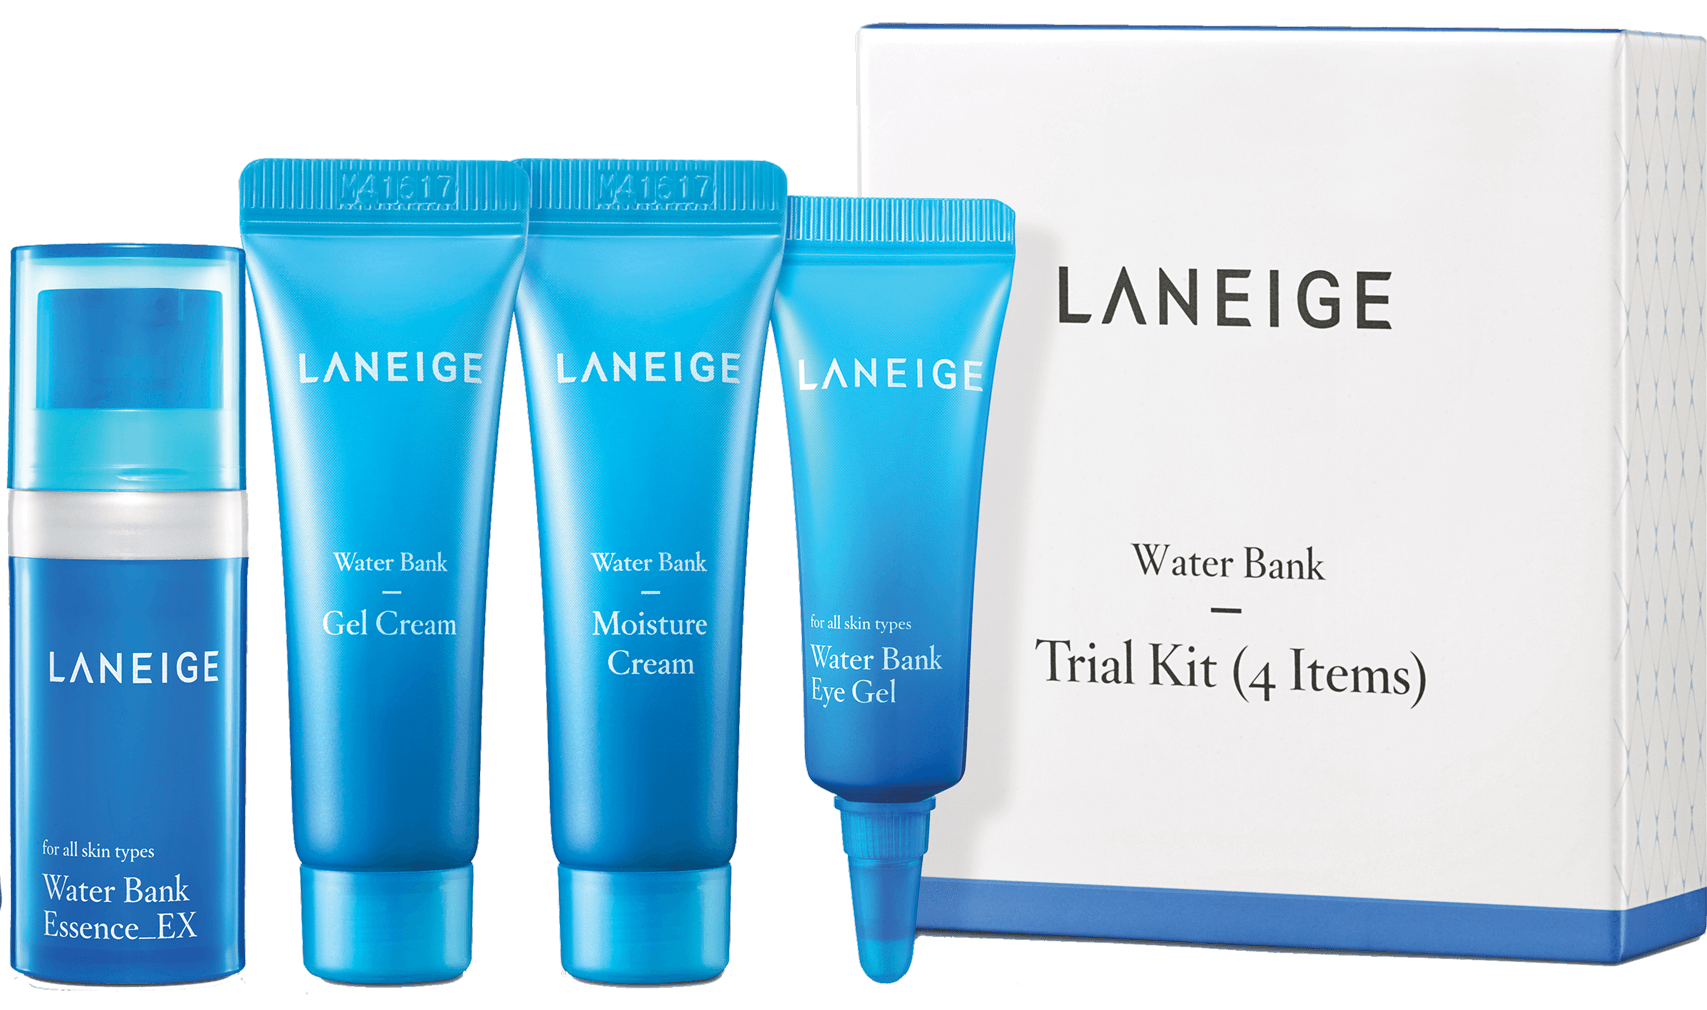 Laneige,Water Bank Trial Kit,ลาเนจ,Laneige Water Bank Trial Kit,เซทลาเนจ,Water Bank Essence,Water Bank Gel Cream,Water Bank Moisture Cream